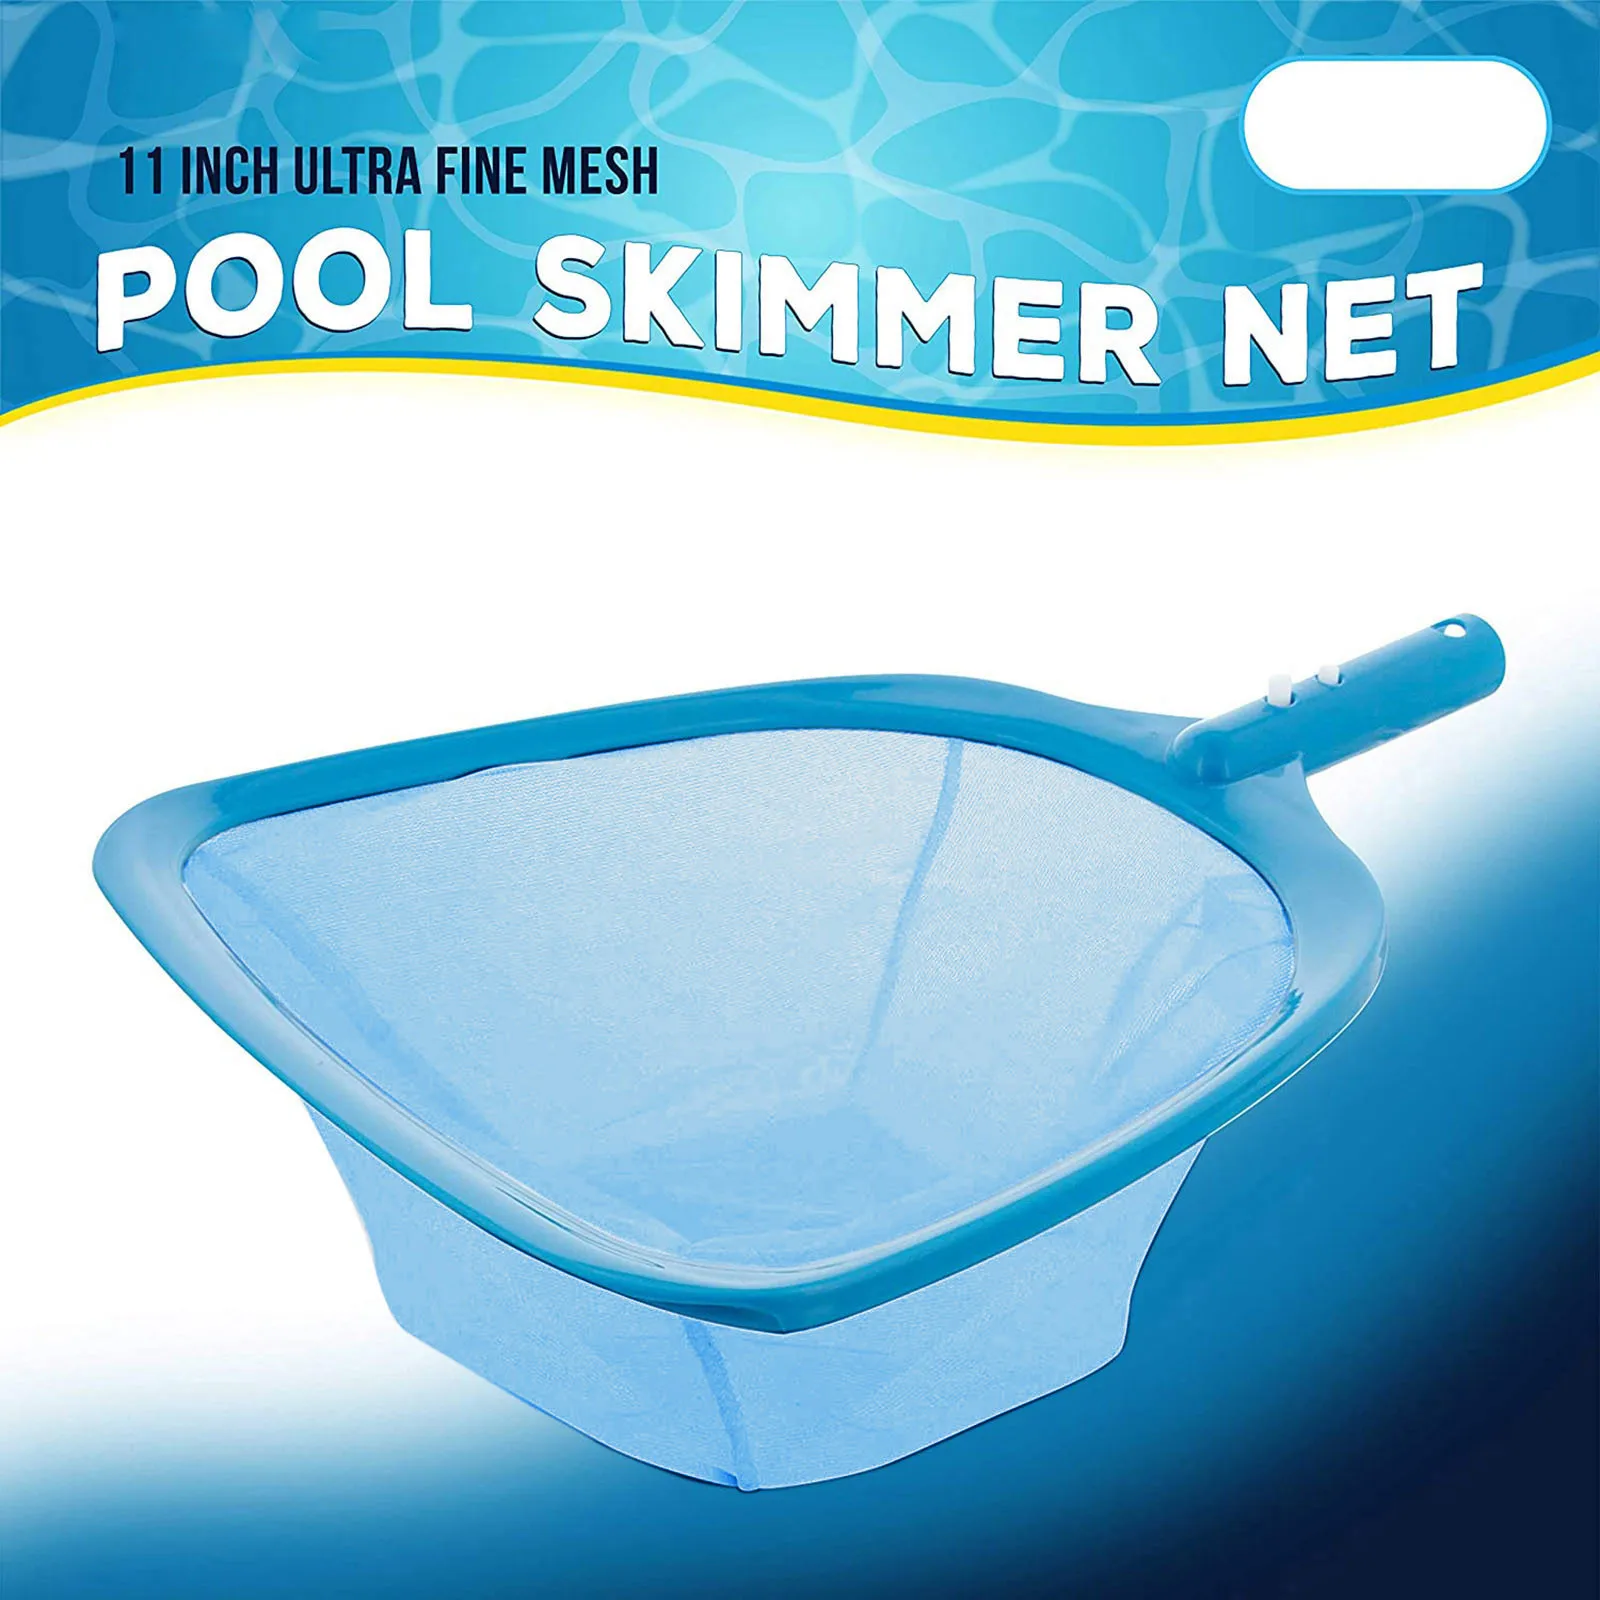 Professional Leaf Rake Mesh Frame Net Skimmer Cleaner Swimming Pool Spa Tool Hot